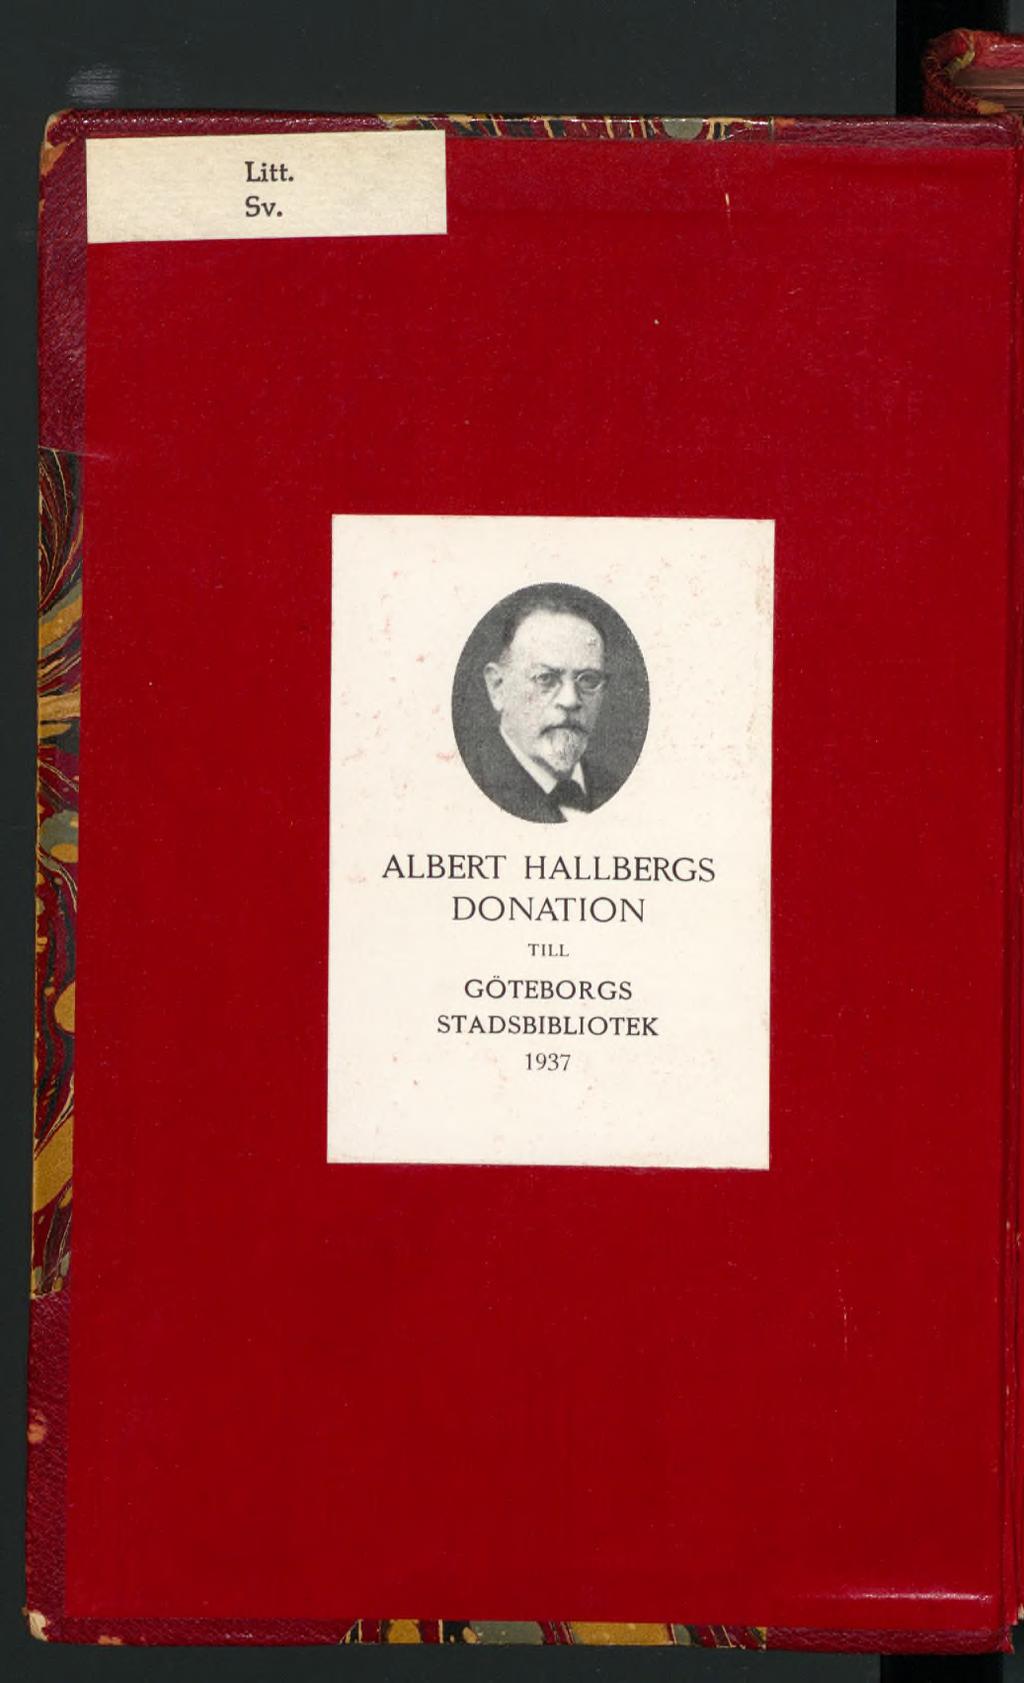 a ir- JT~~" ALBERT HALLBERGS DONATION